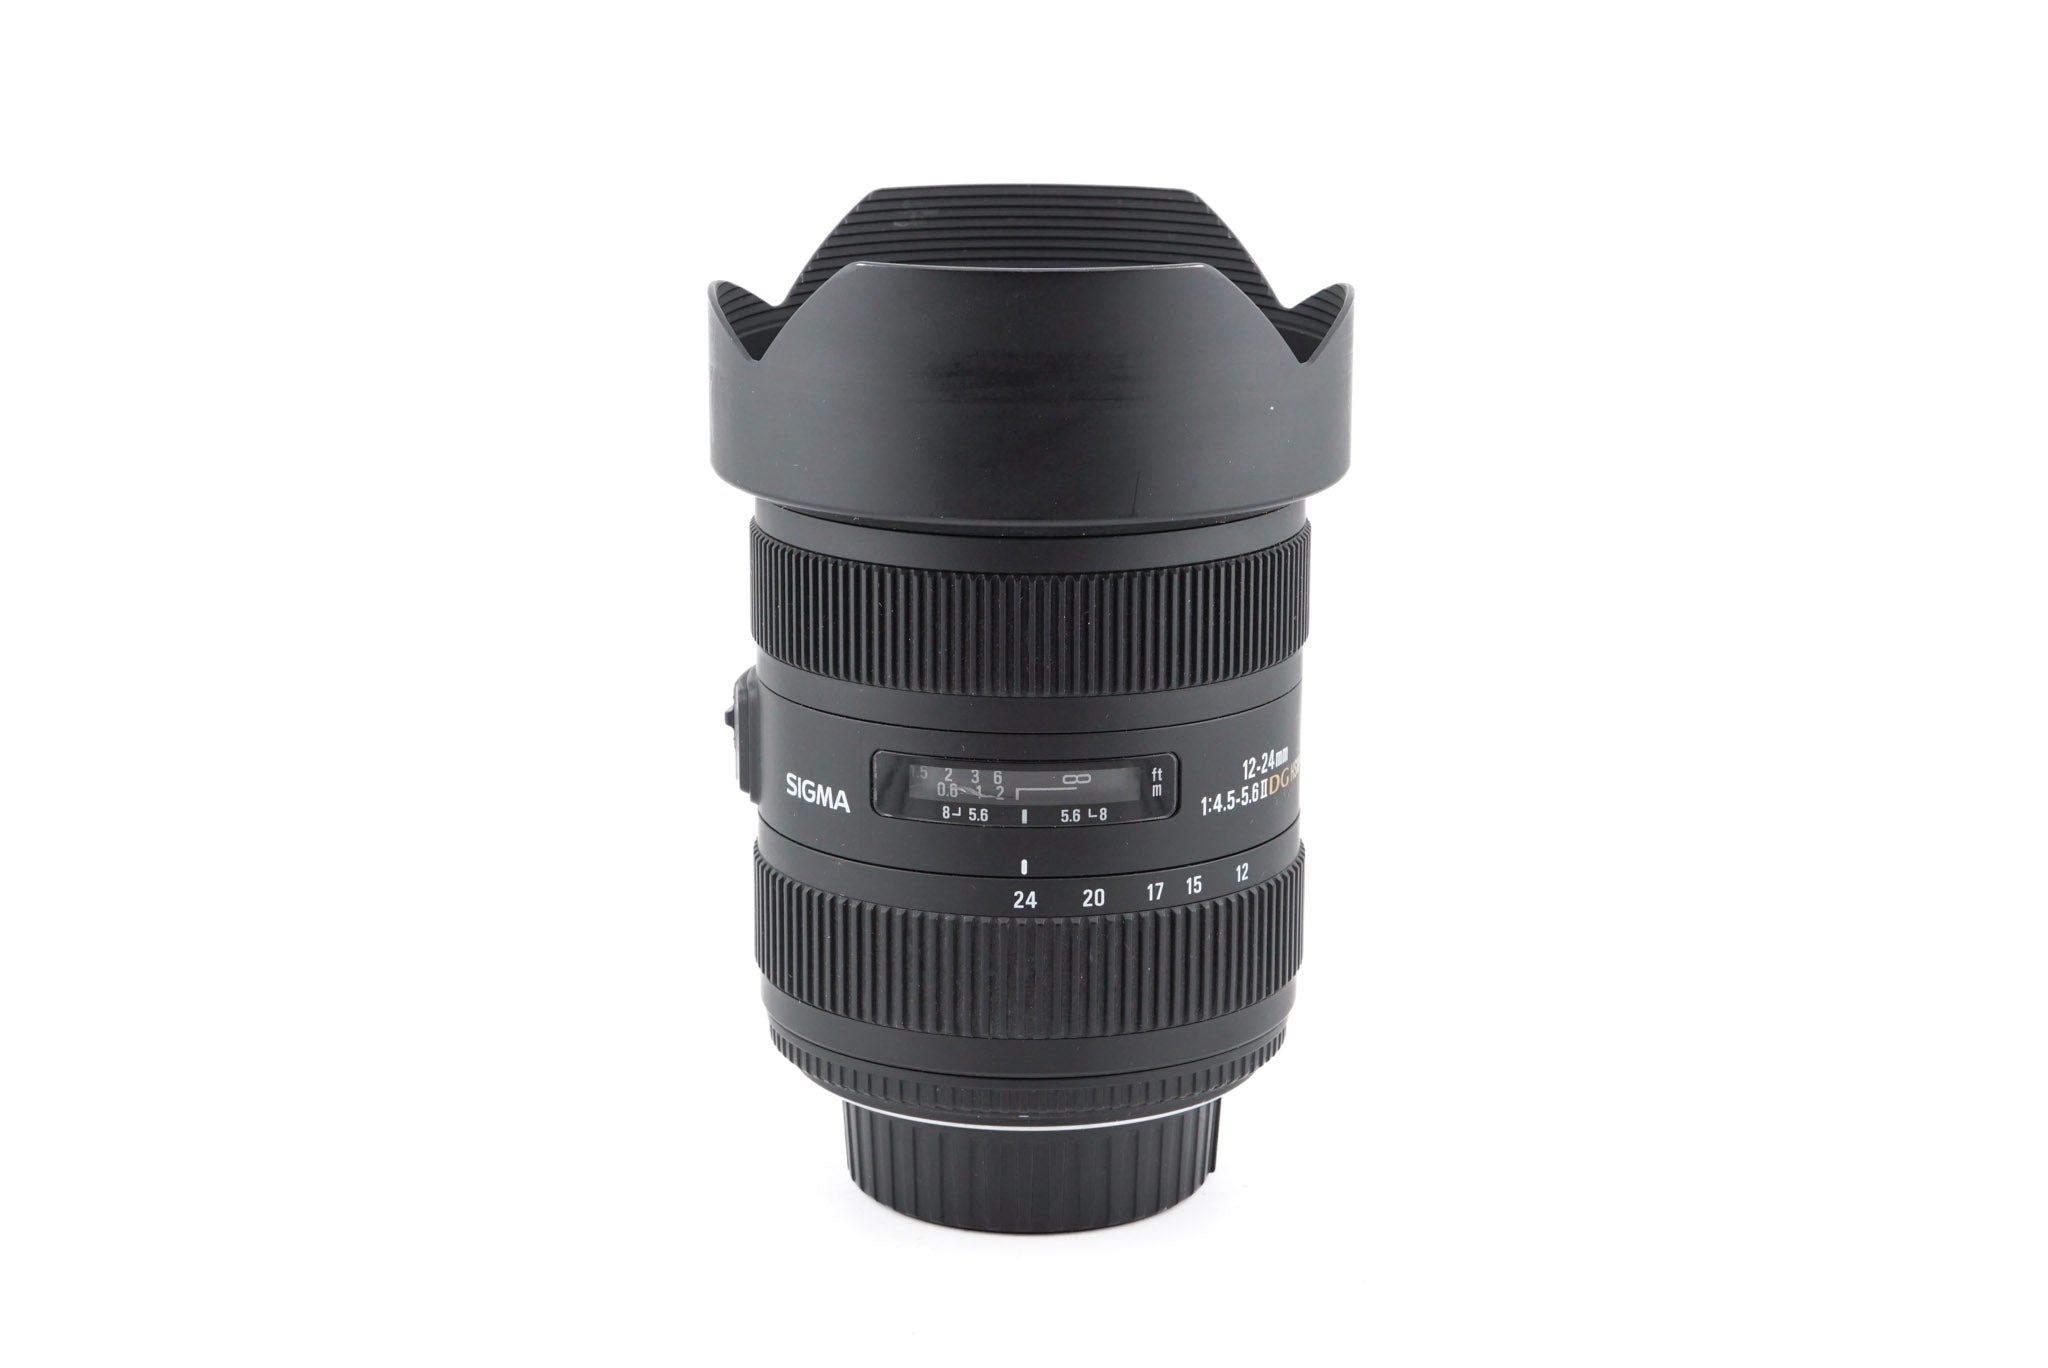 Sigma 12-24mm f4.5-5.6 Aspherical DG HSM II - Lens